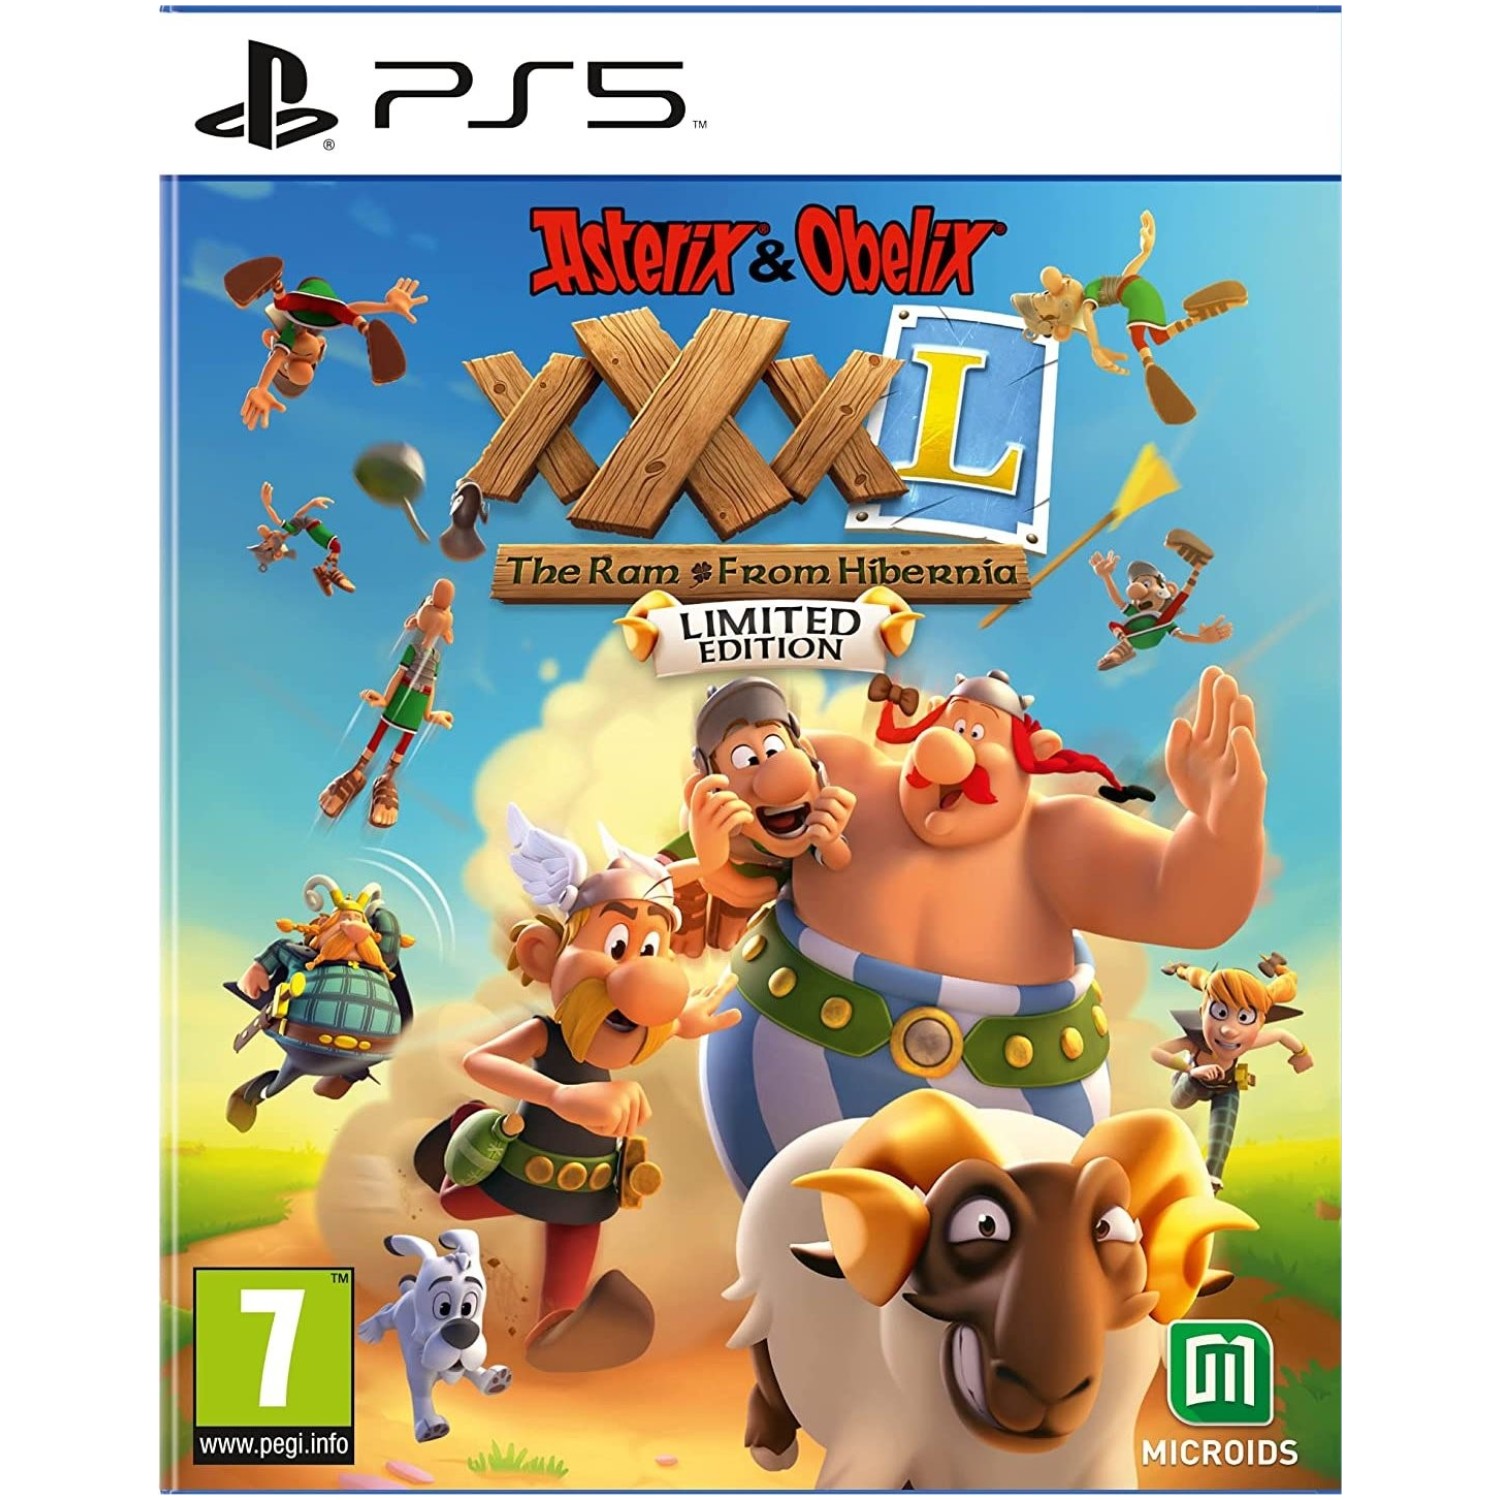 Asterix & Obelix XXXL: The Ram From Hibernia - Limited Edition (Playstation 5)